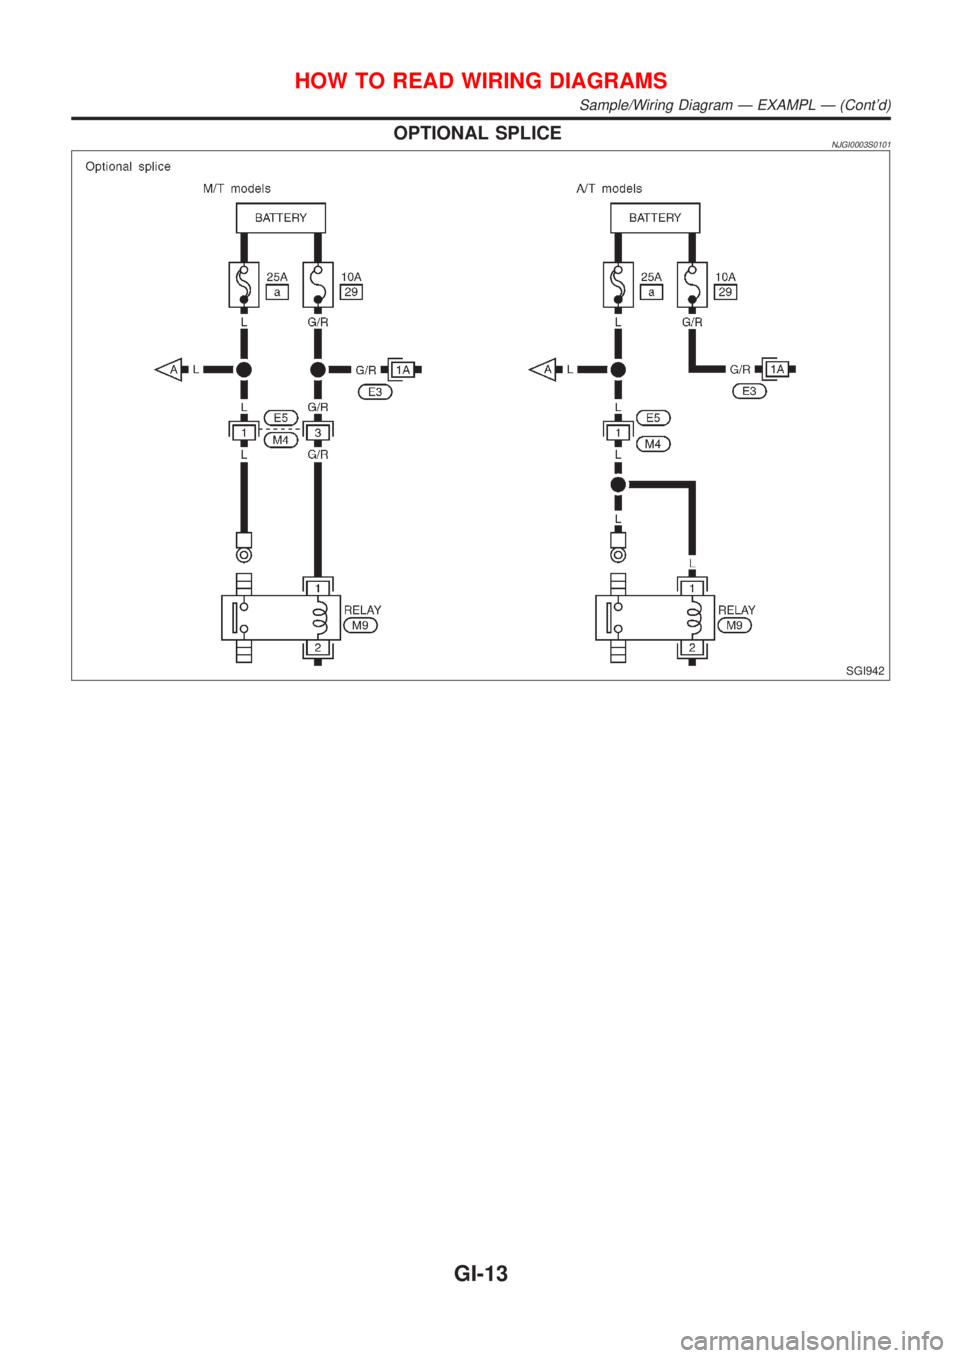 NISSAN ALMERA N16 2001  Electronic Repair Manual OPTIONAL SPLICENJGI0003S0101
SGI942
HOW TO READ WIRING DIAGRAMS
Sample/Wiring Diagram Ð EXAMPL Ð (Contd)
GI-13 